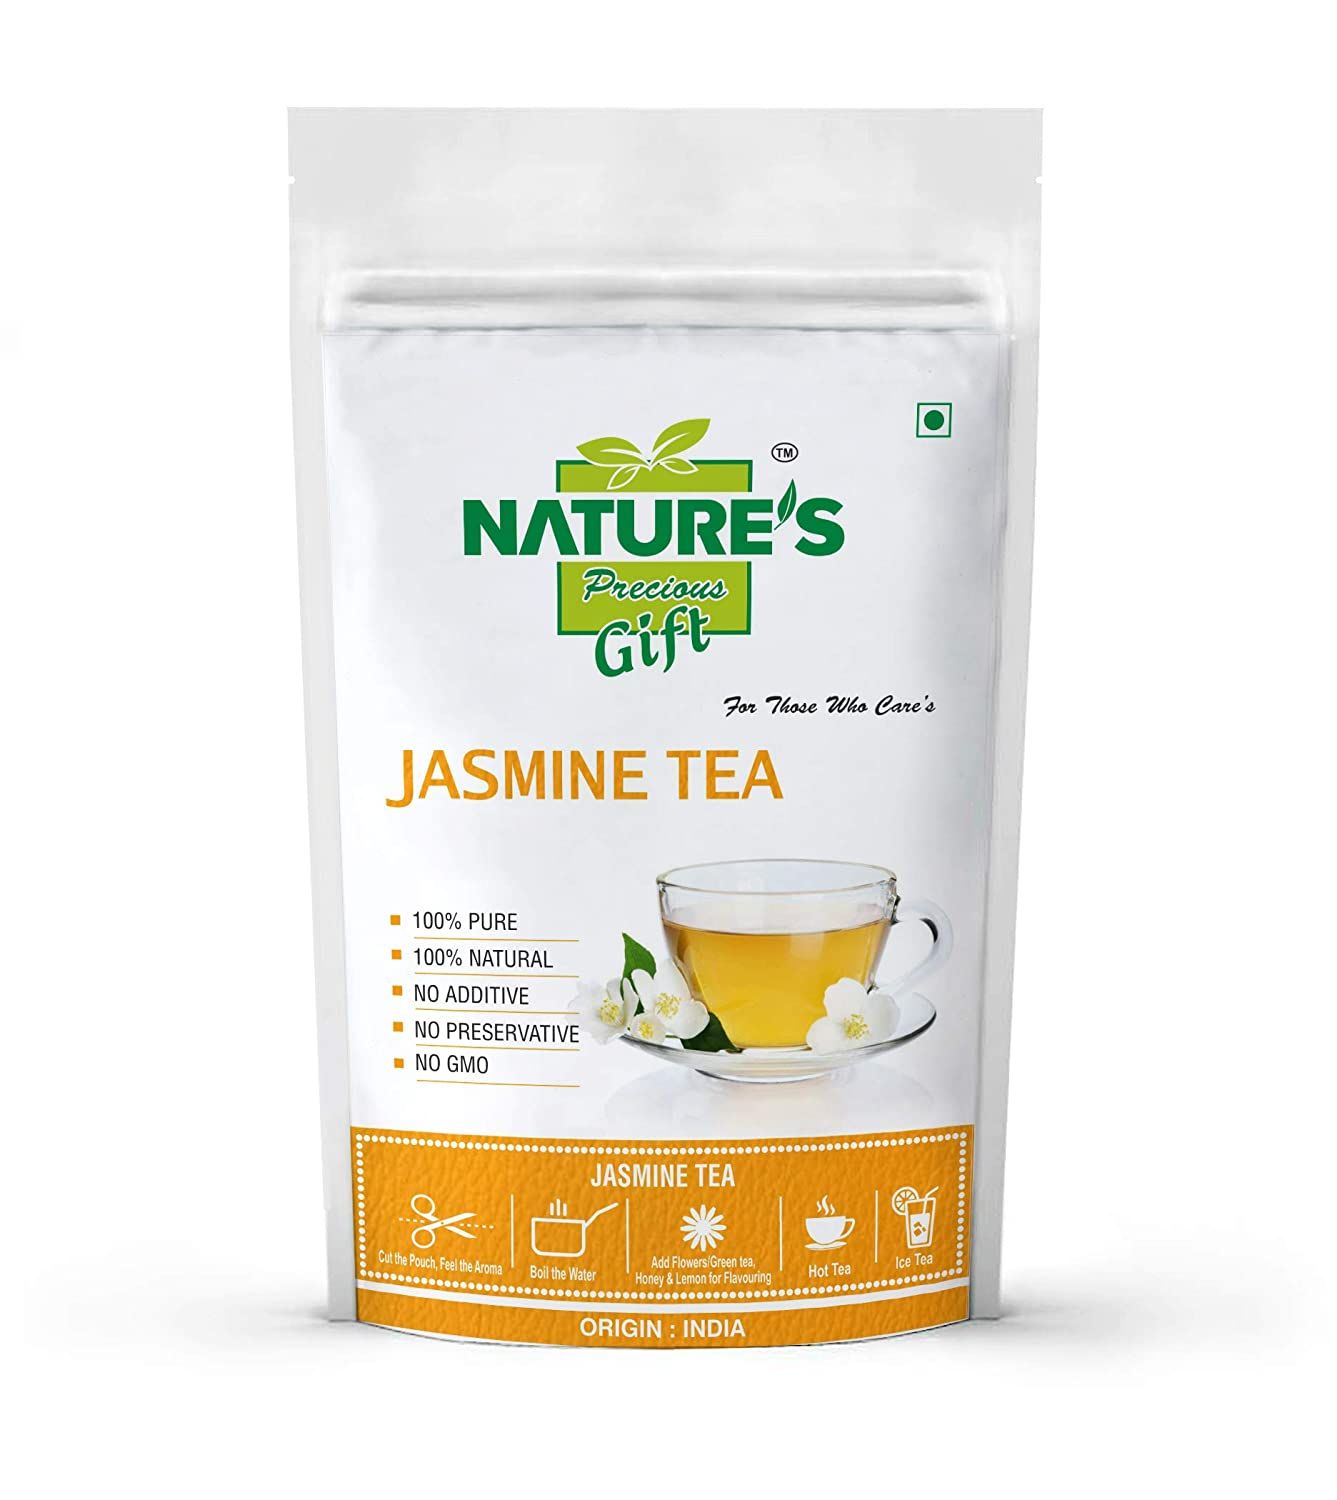 Nature's Gift Jasmine Tea Image